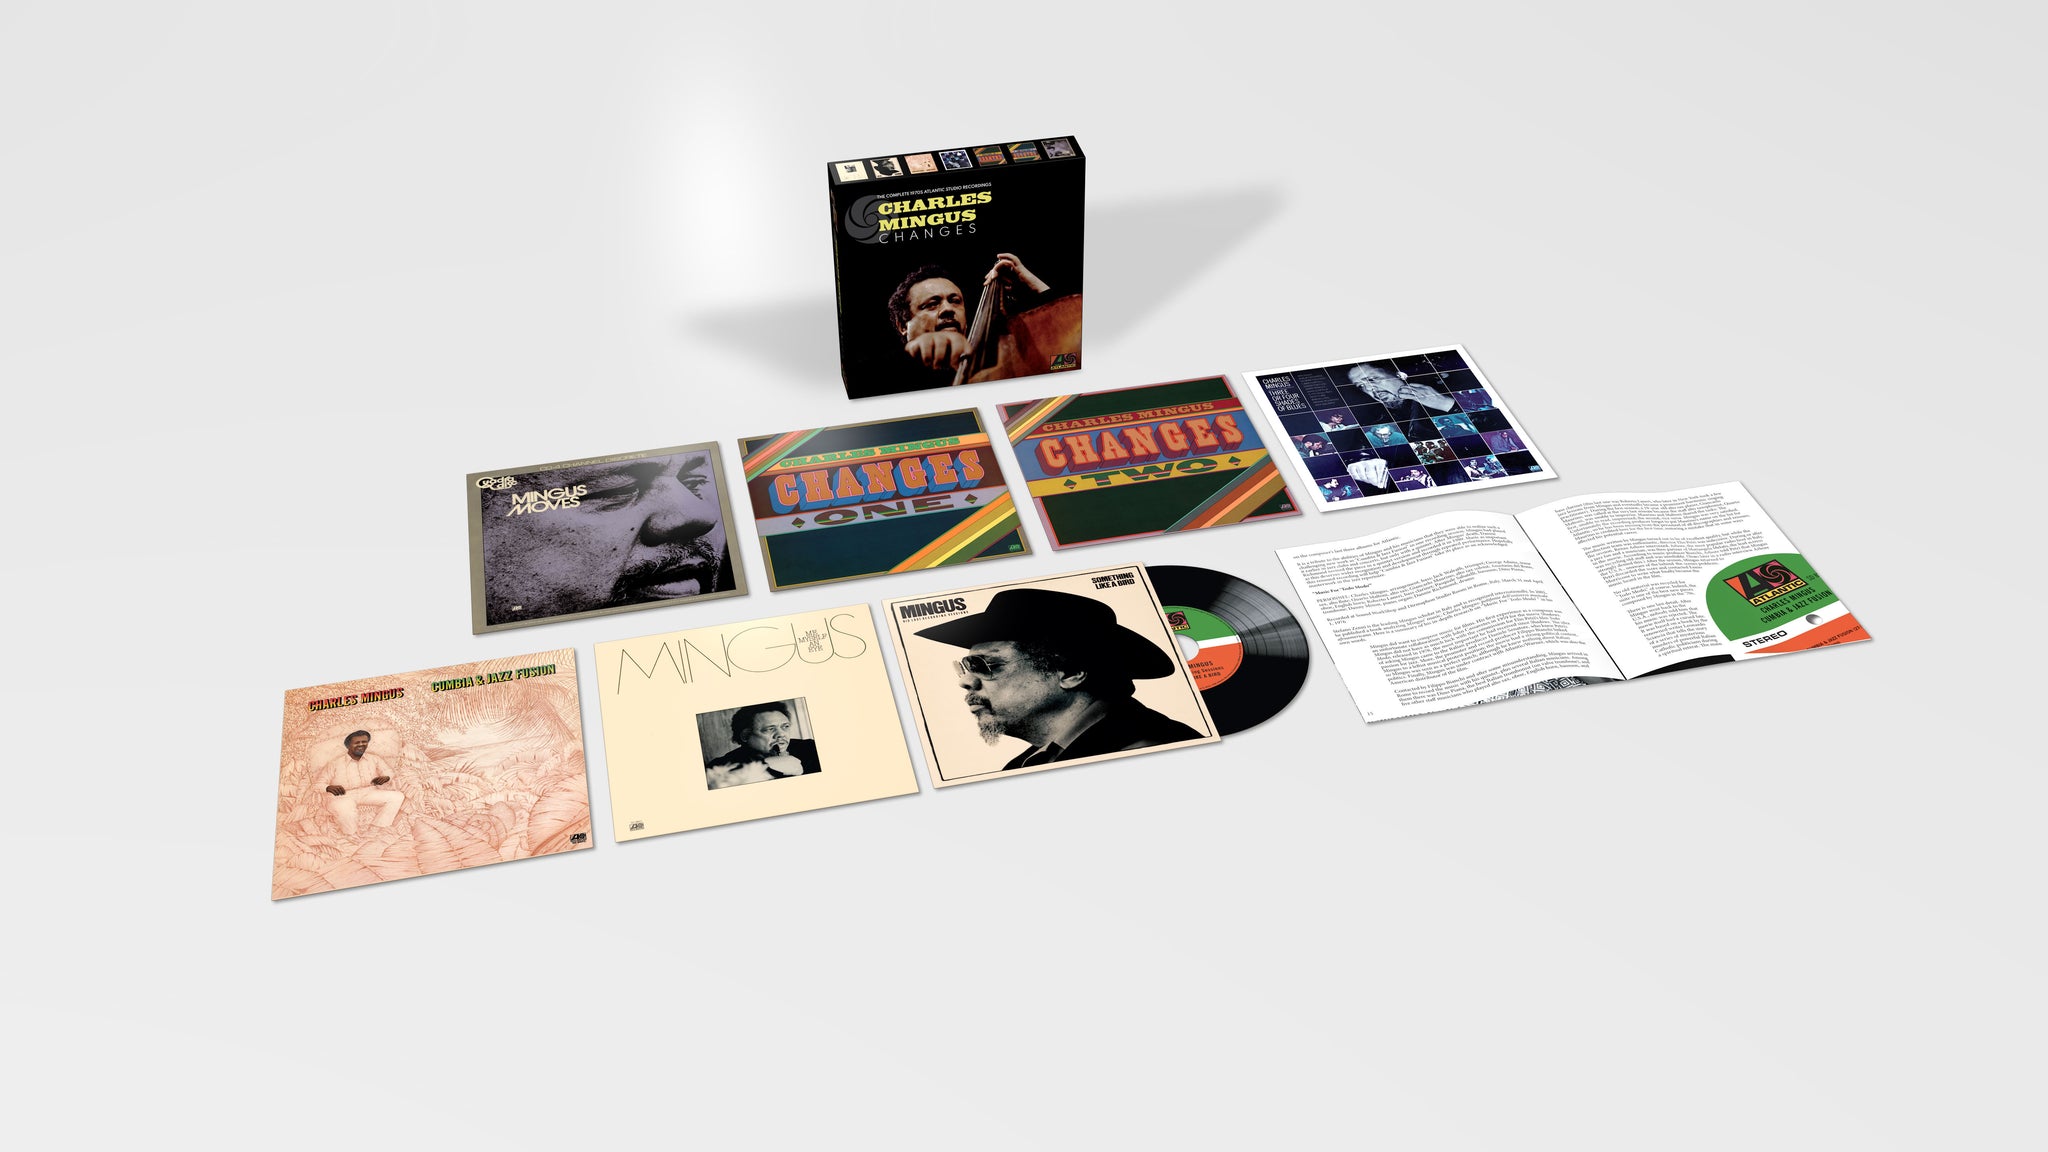 CHARLES MINGUS - Changes: The Complete 1970s Atlantic Studio Recordings - 7CD - Box Set